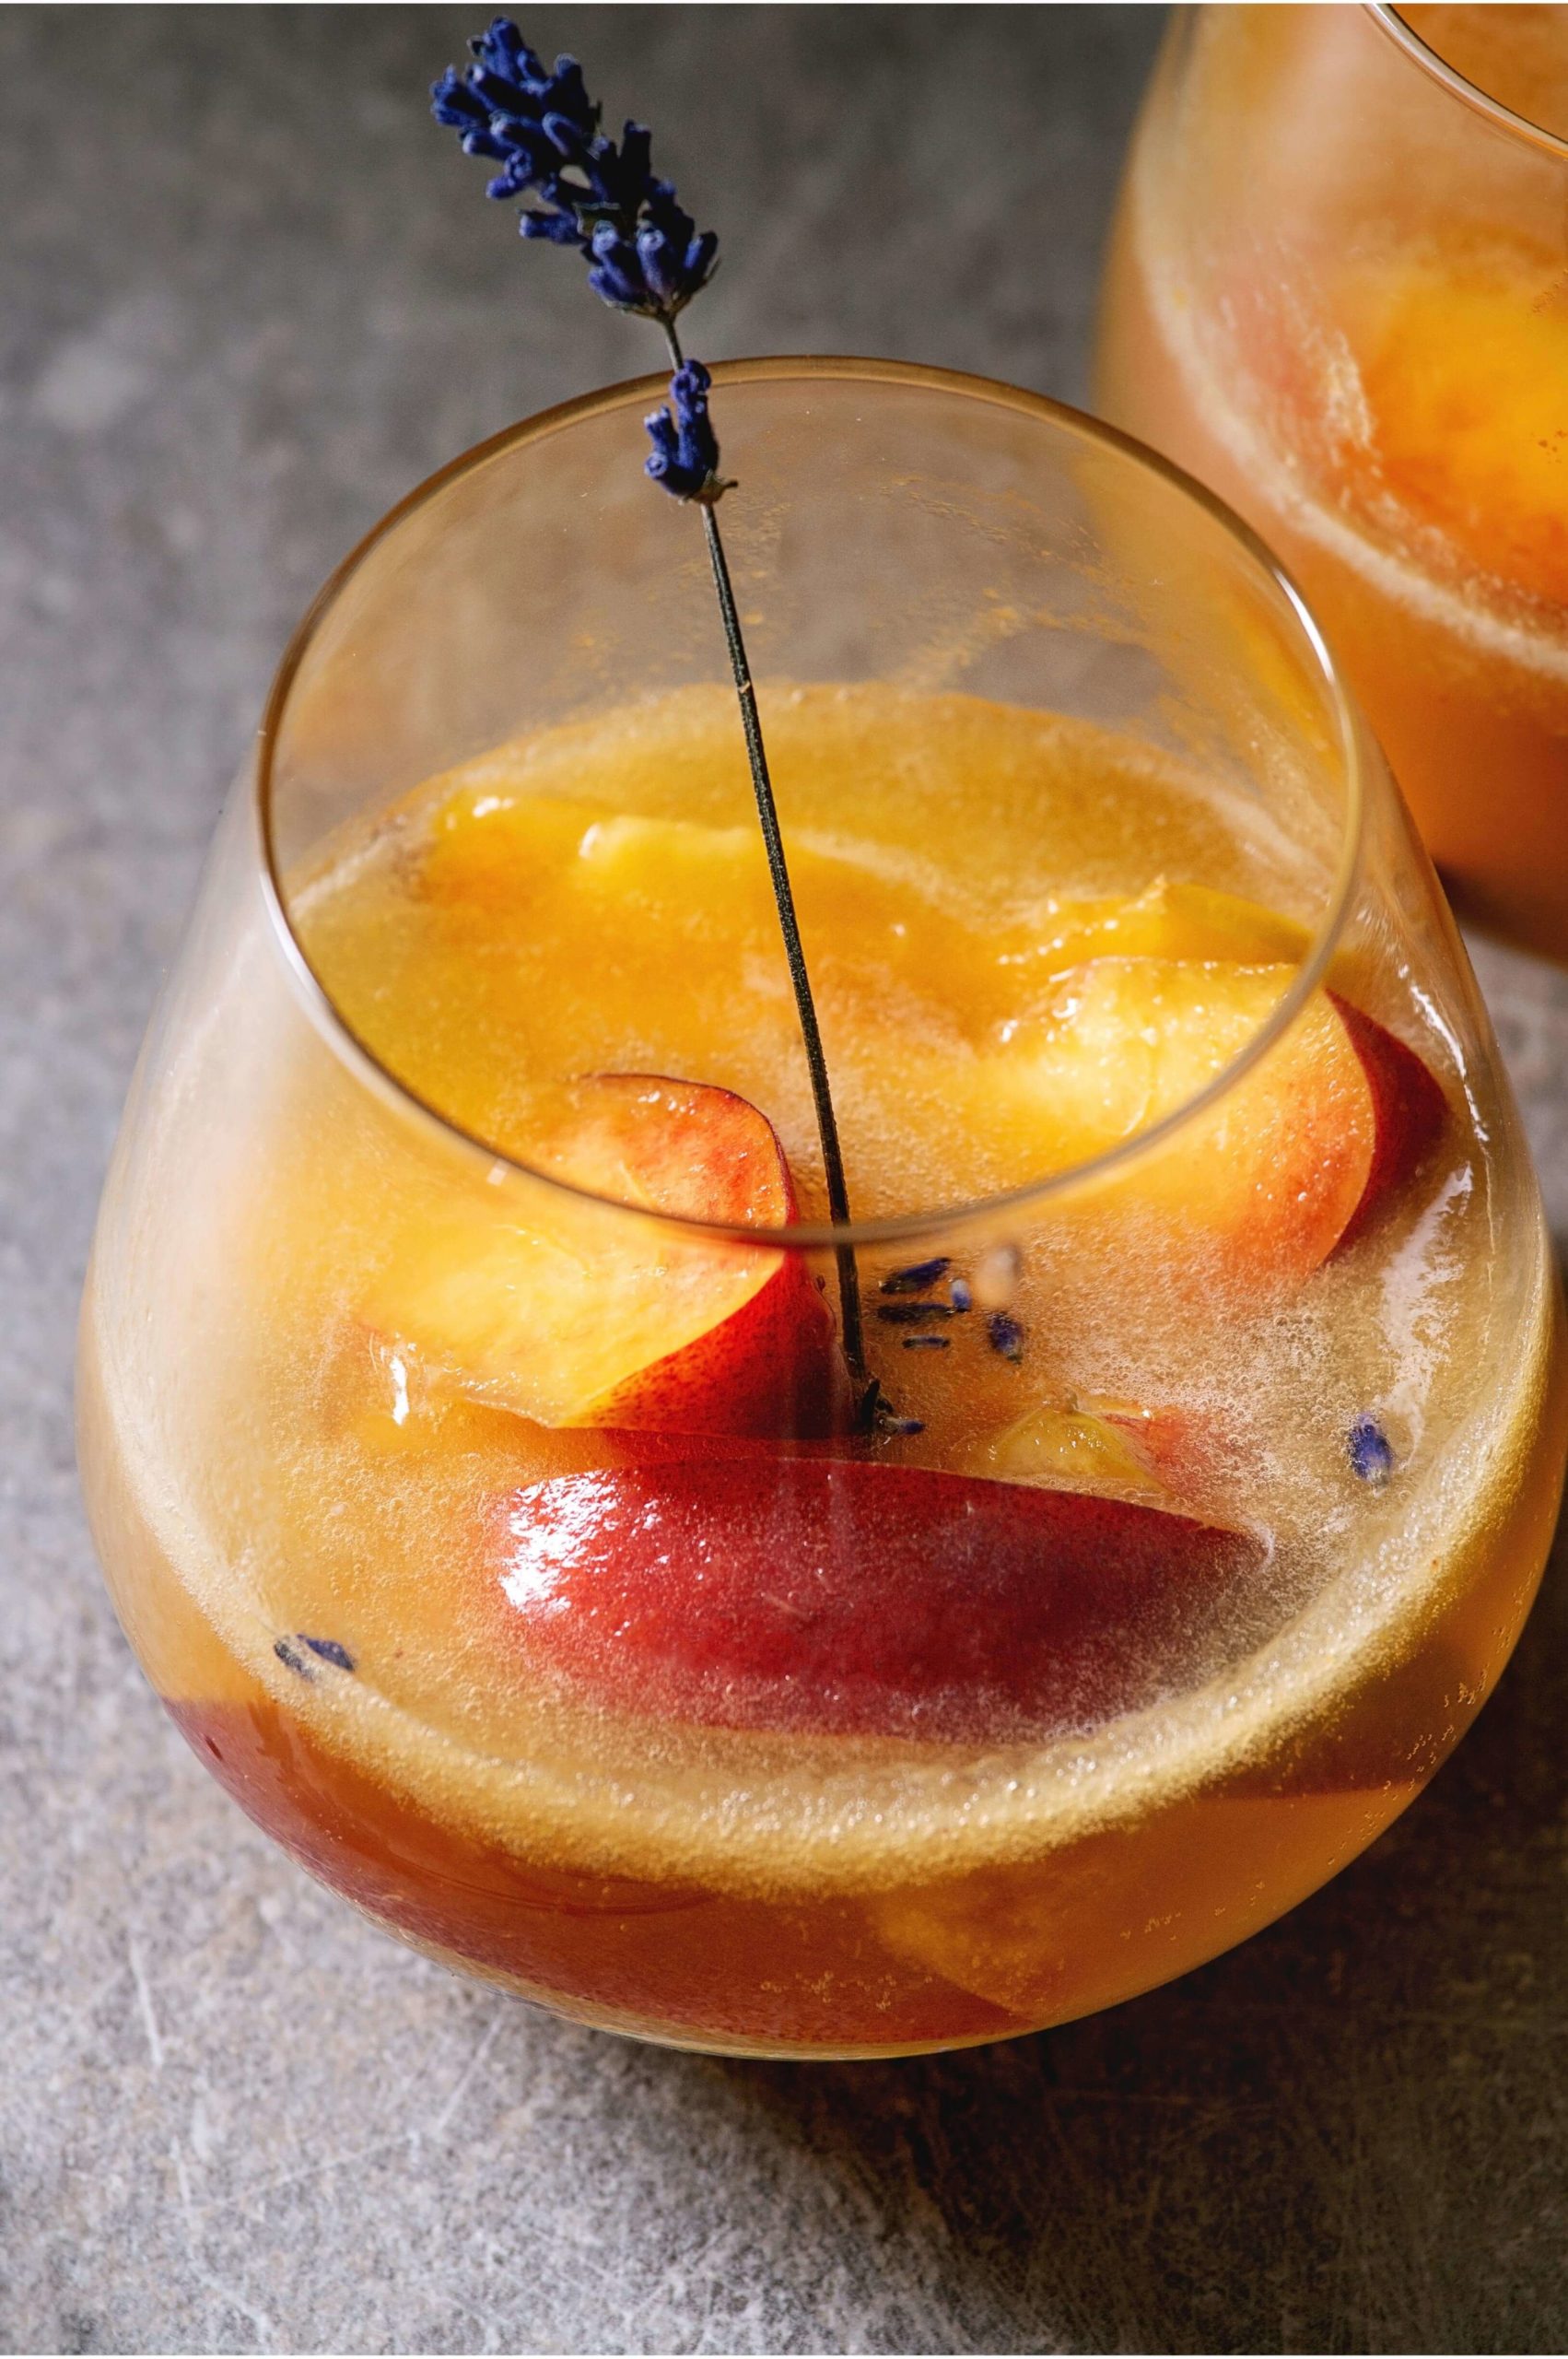 Peach Lemonade Recipe Step By Step Instructions